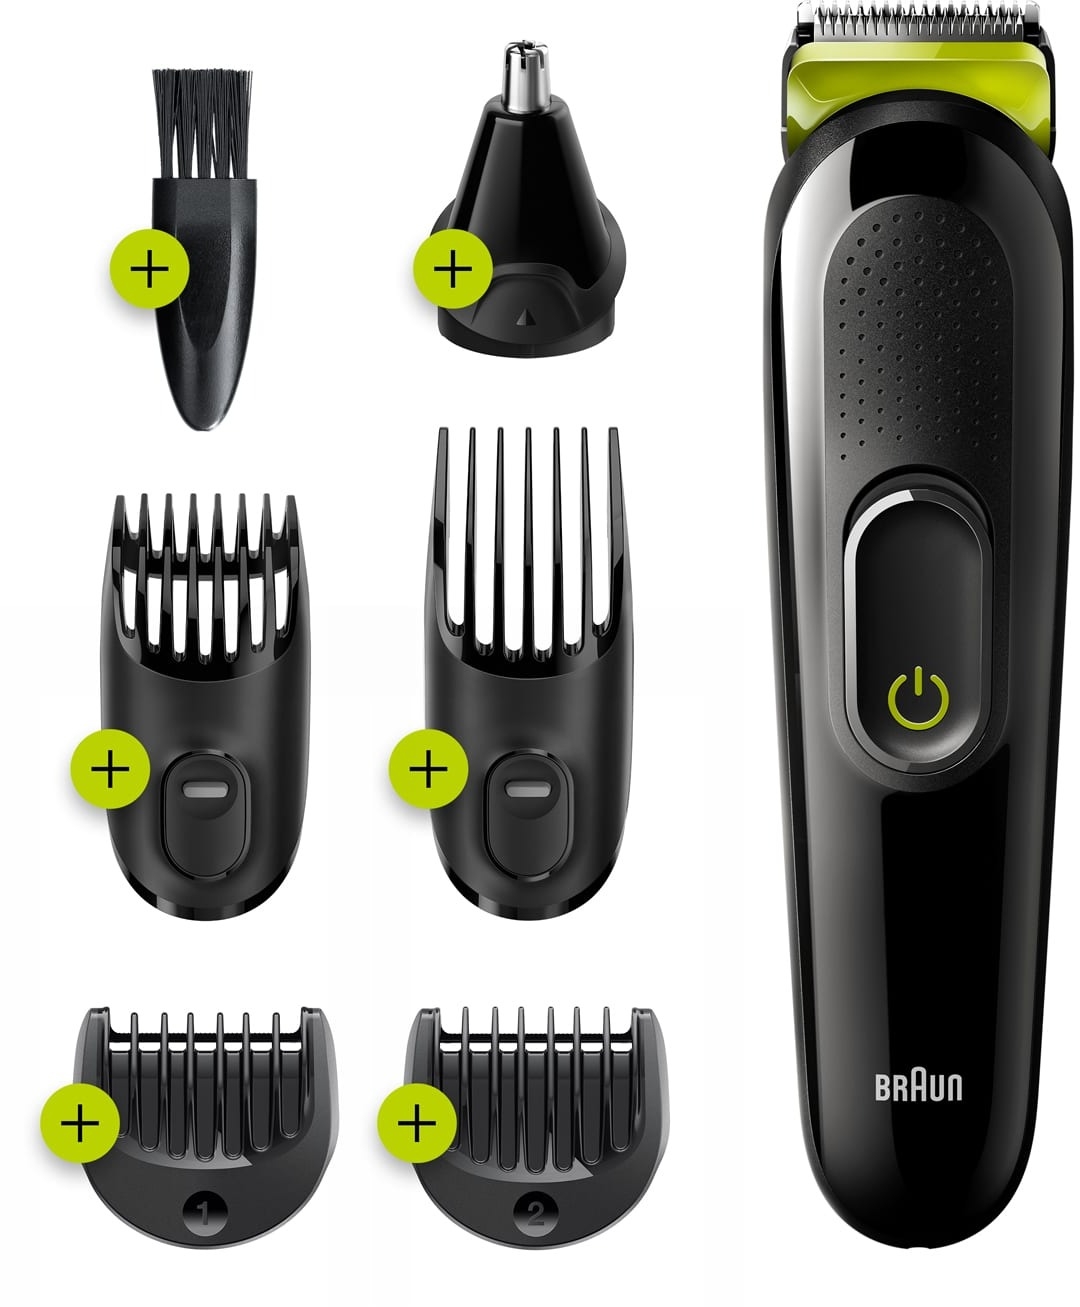 Braun MGK3221 All in One Beard Trimmer & Hair Clipper Grooming Kit